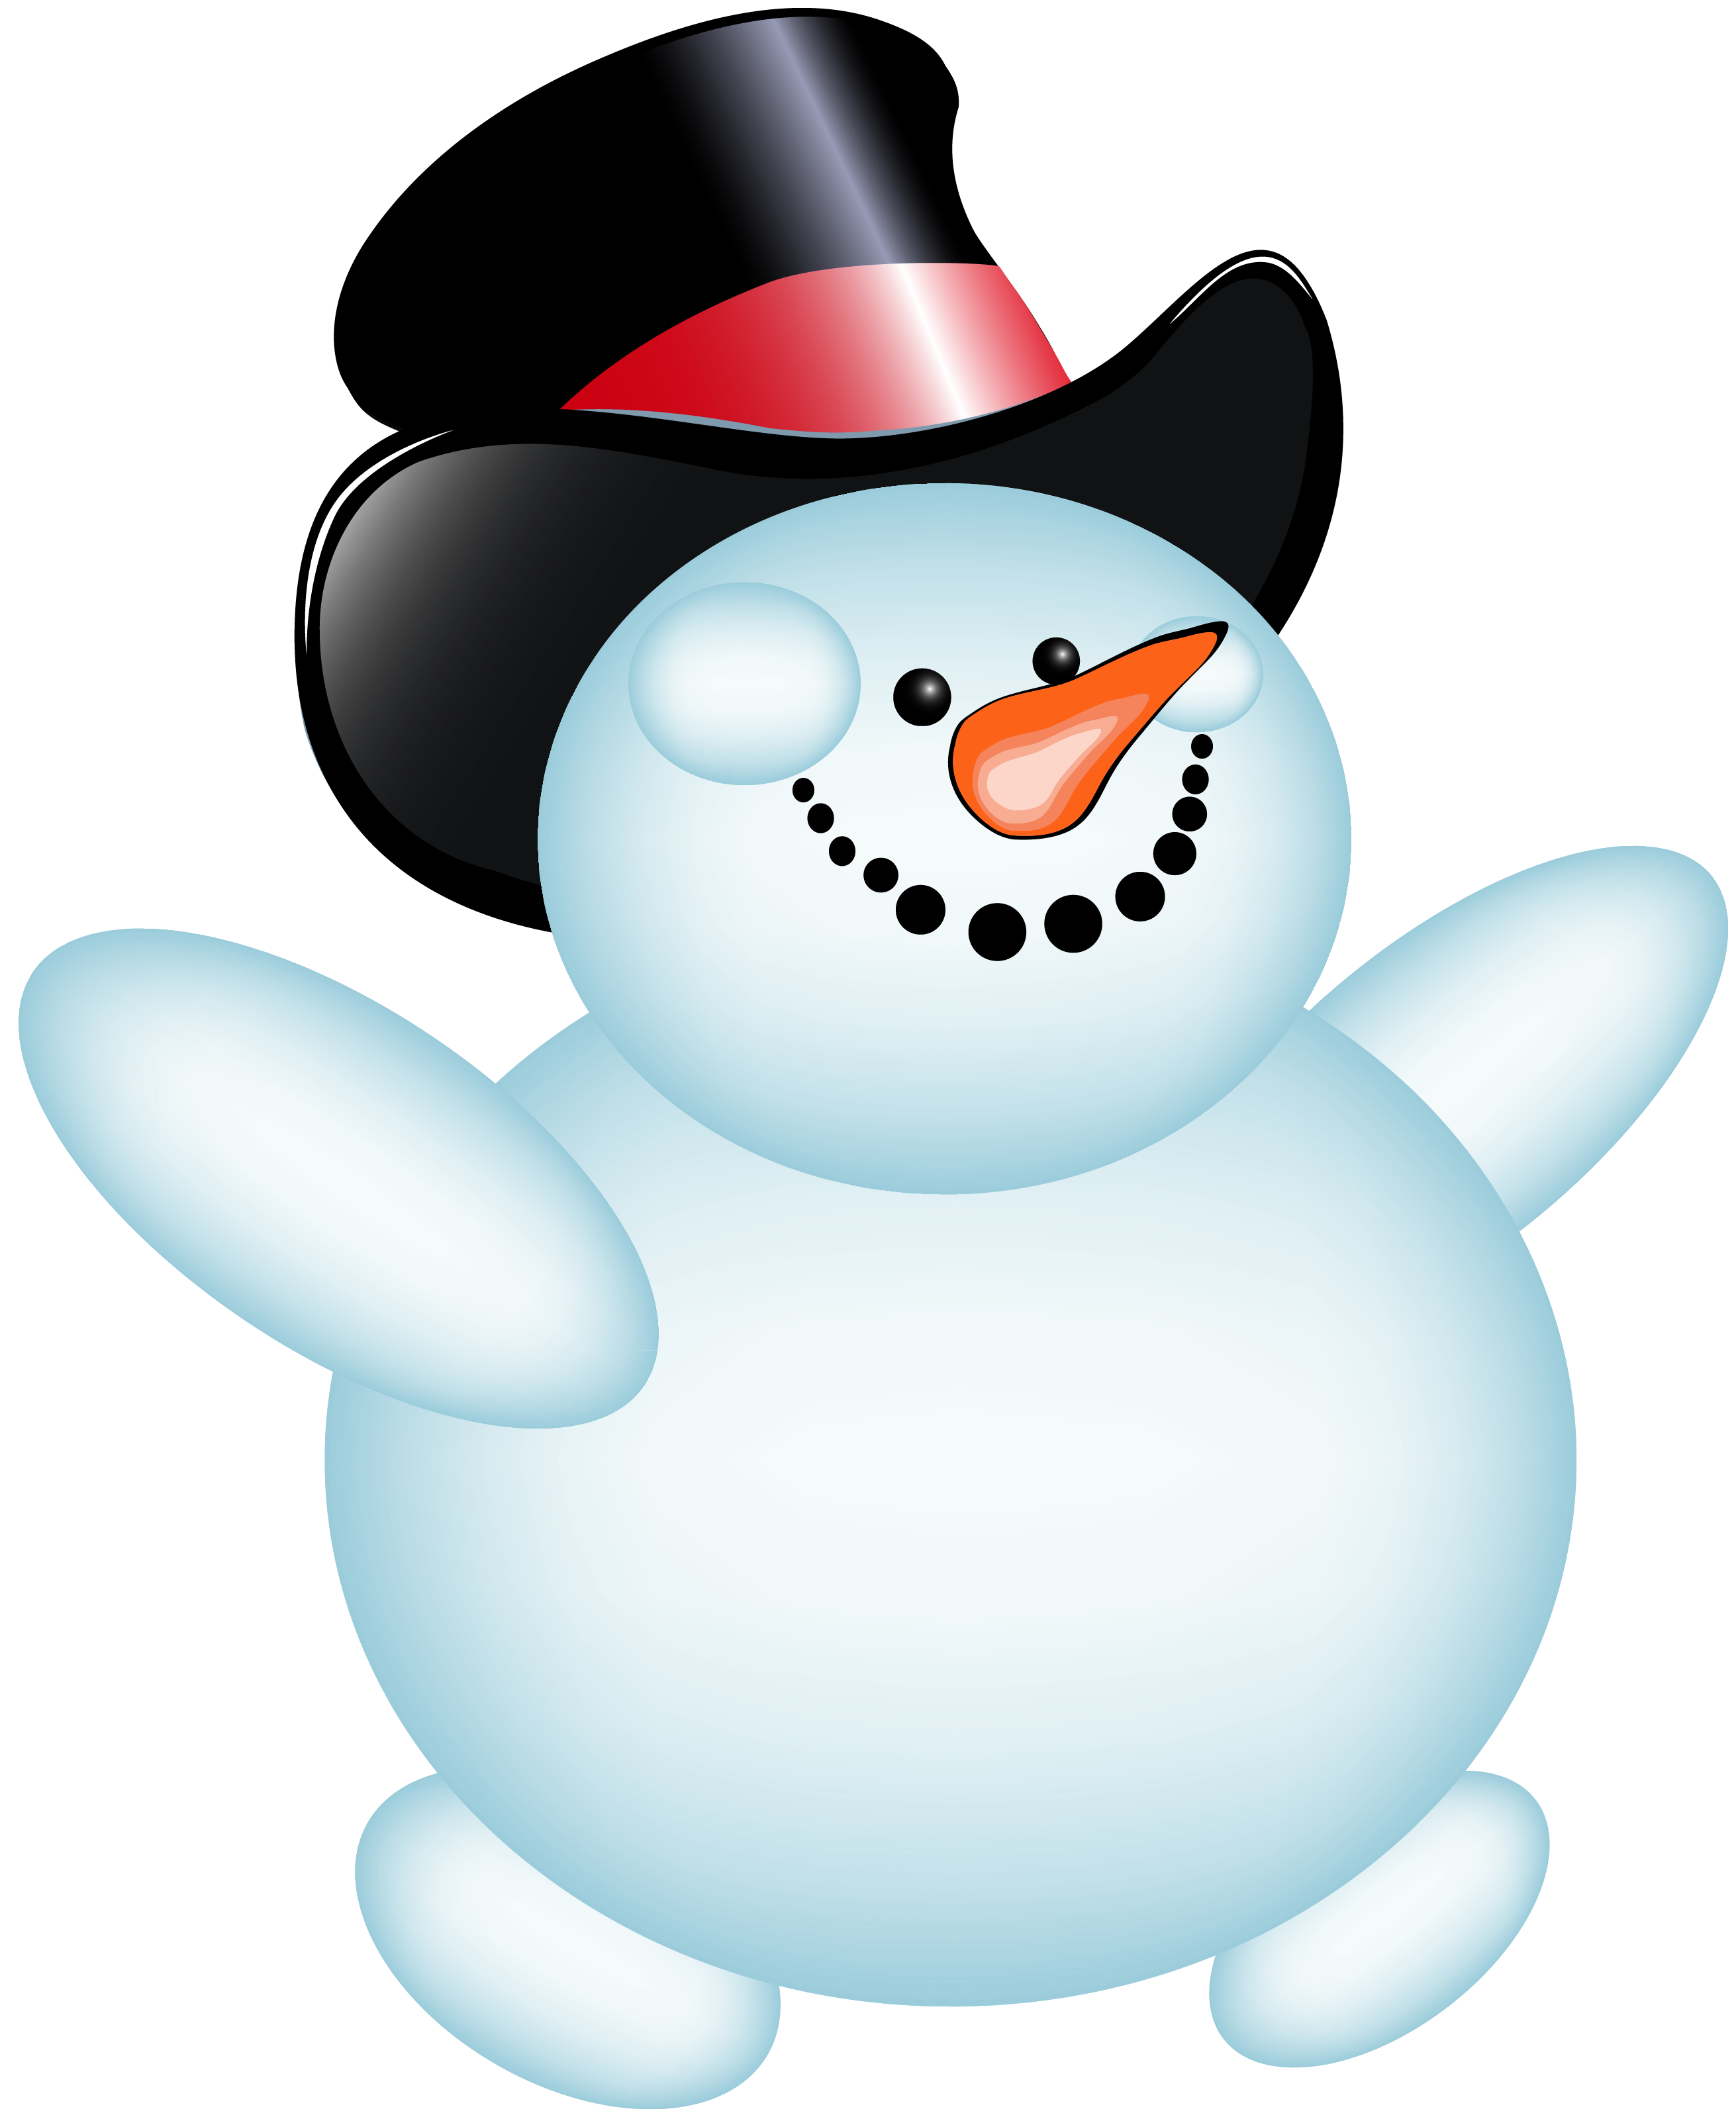 Free Snowman Clipart Transparent Background, Download Free Snowman ...